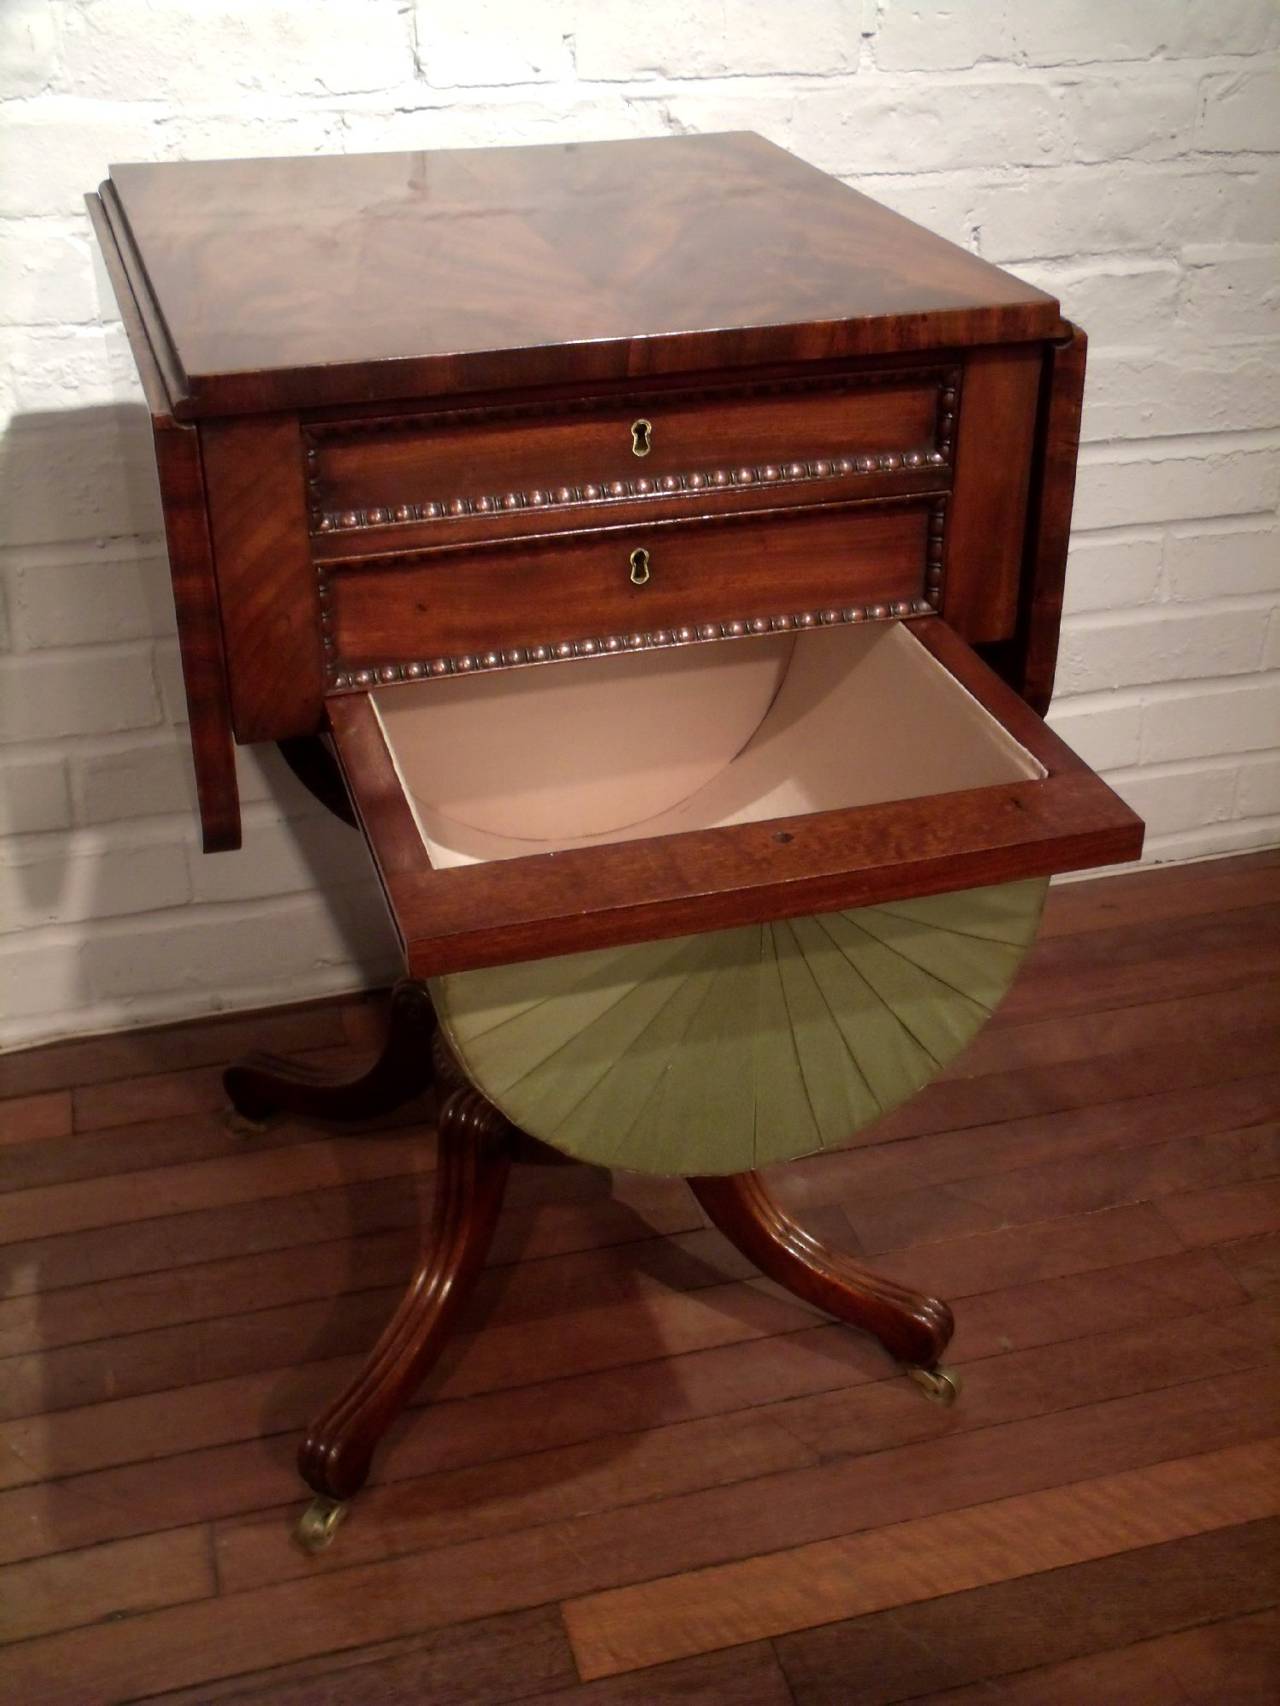 British Regency Mahogany Drop-Leaf Work or Writing Table with Secret Drawer